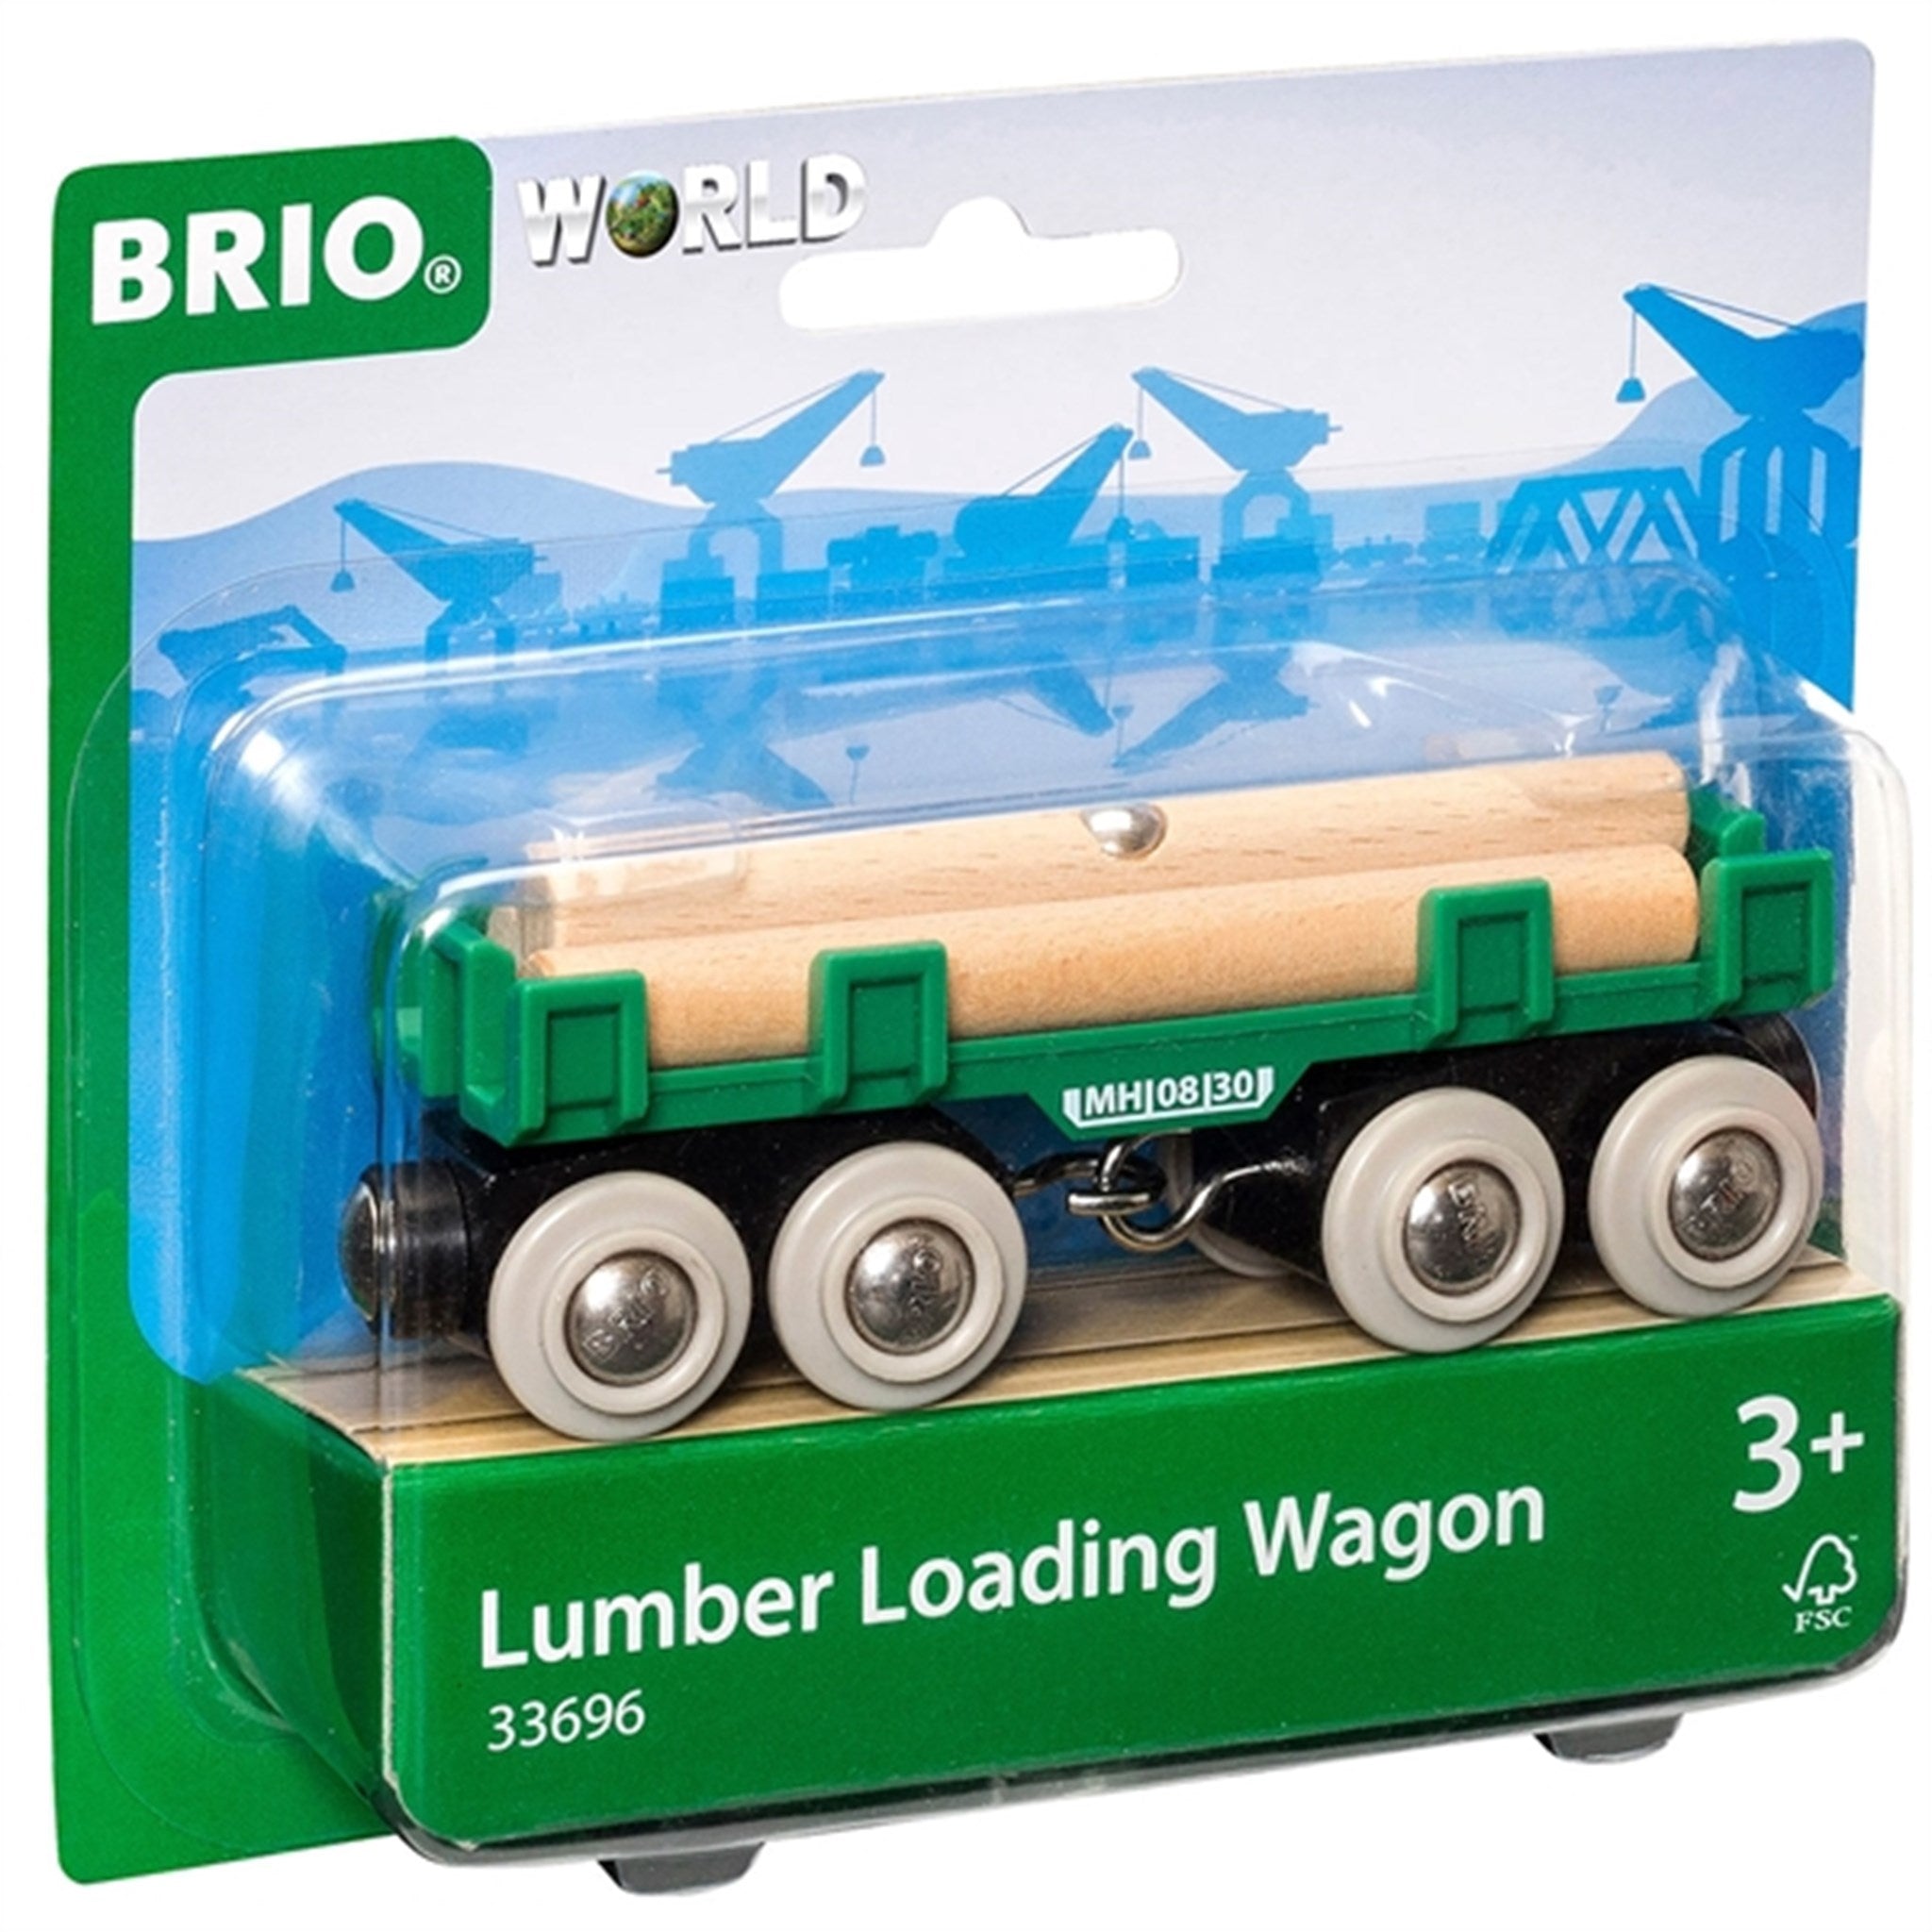 BRIO® Lumber Loading Wagon 2